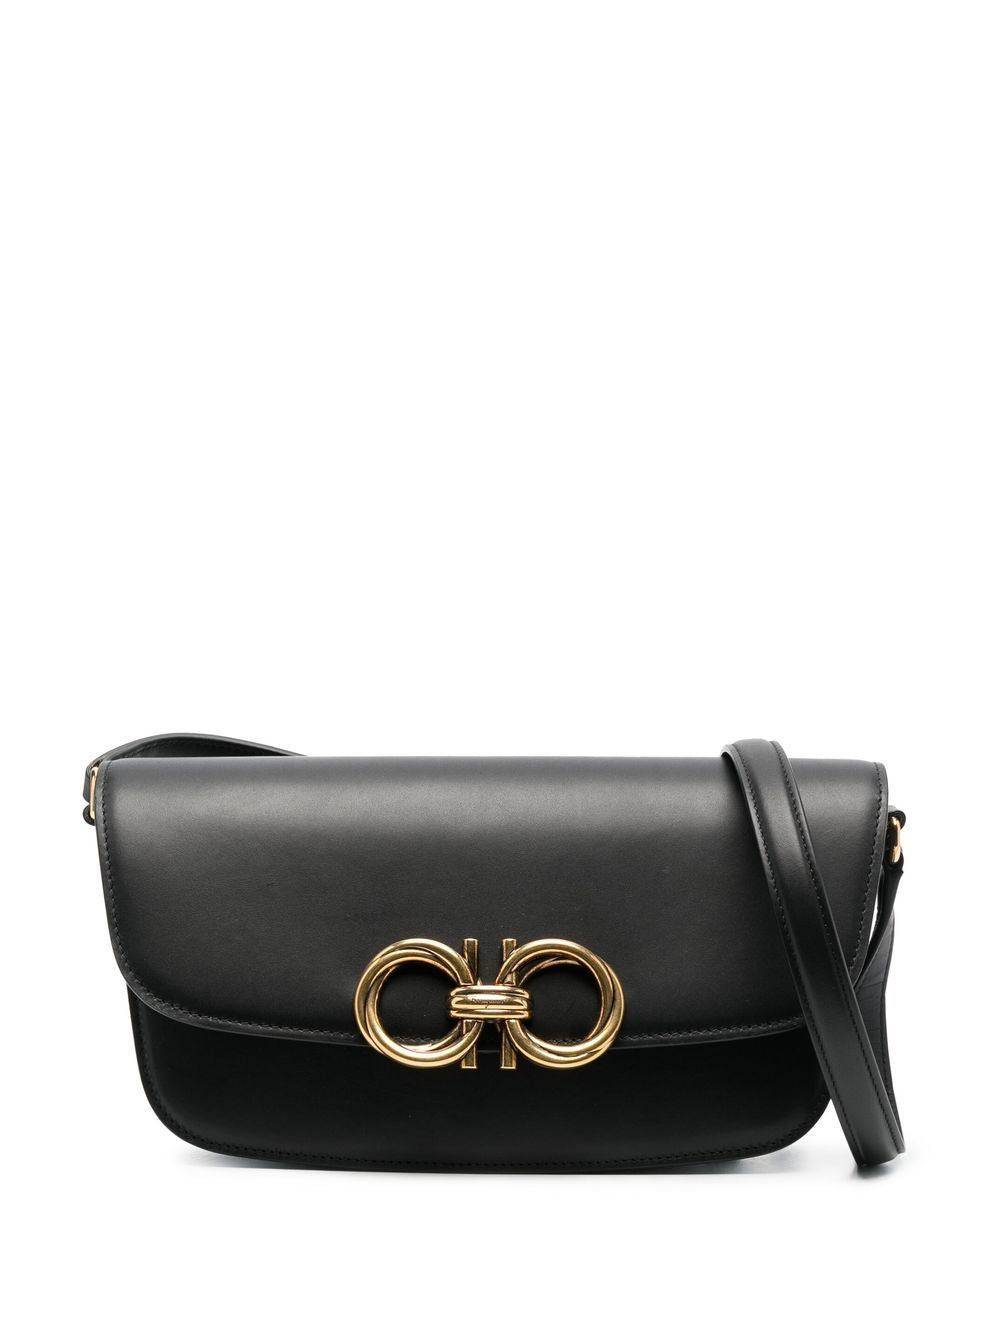 FERRAGAMO Luxurious Black Calf Leather Crossbody Bag for Women - SS23 Collection